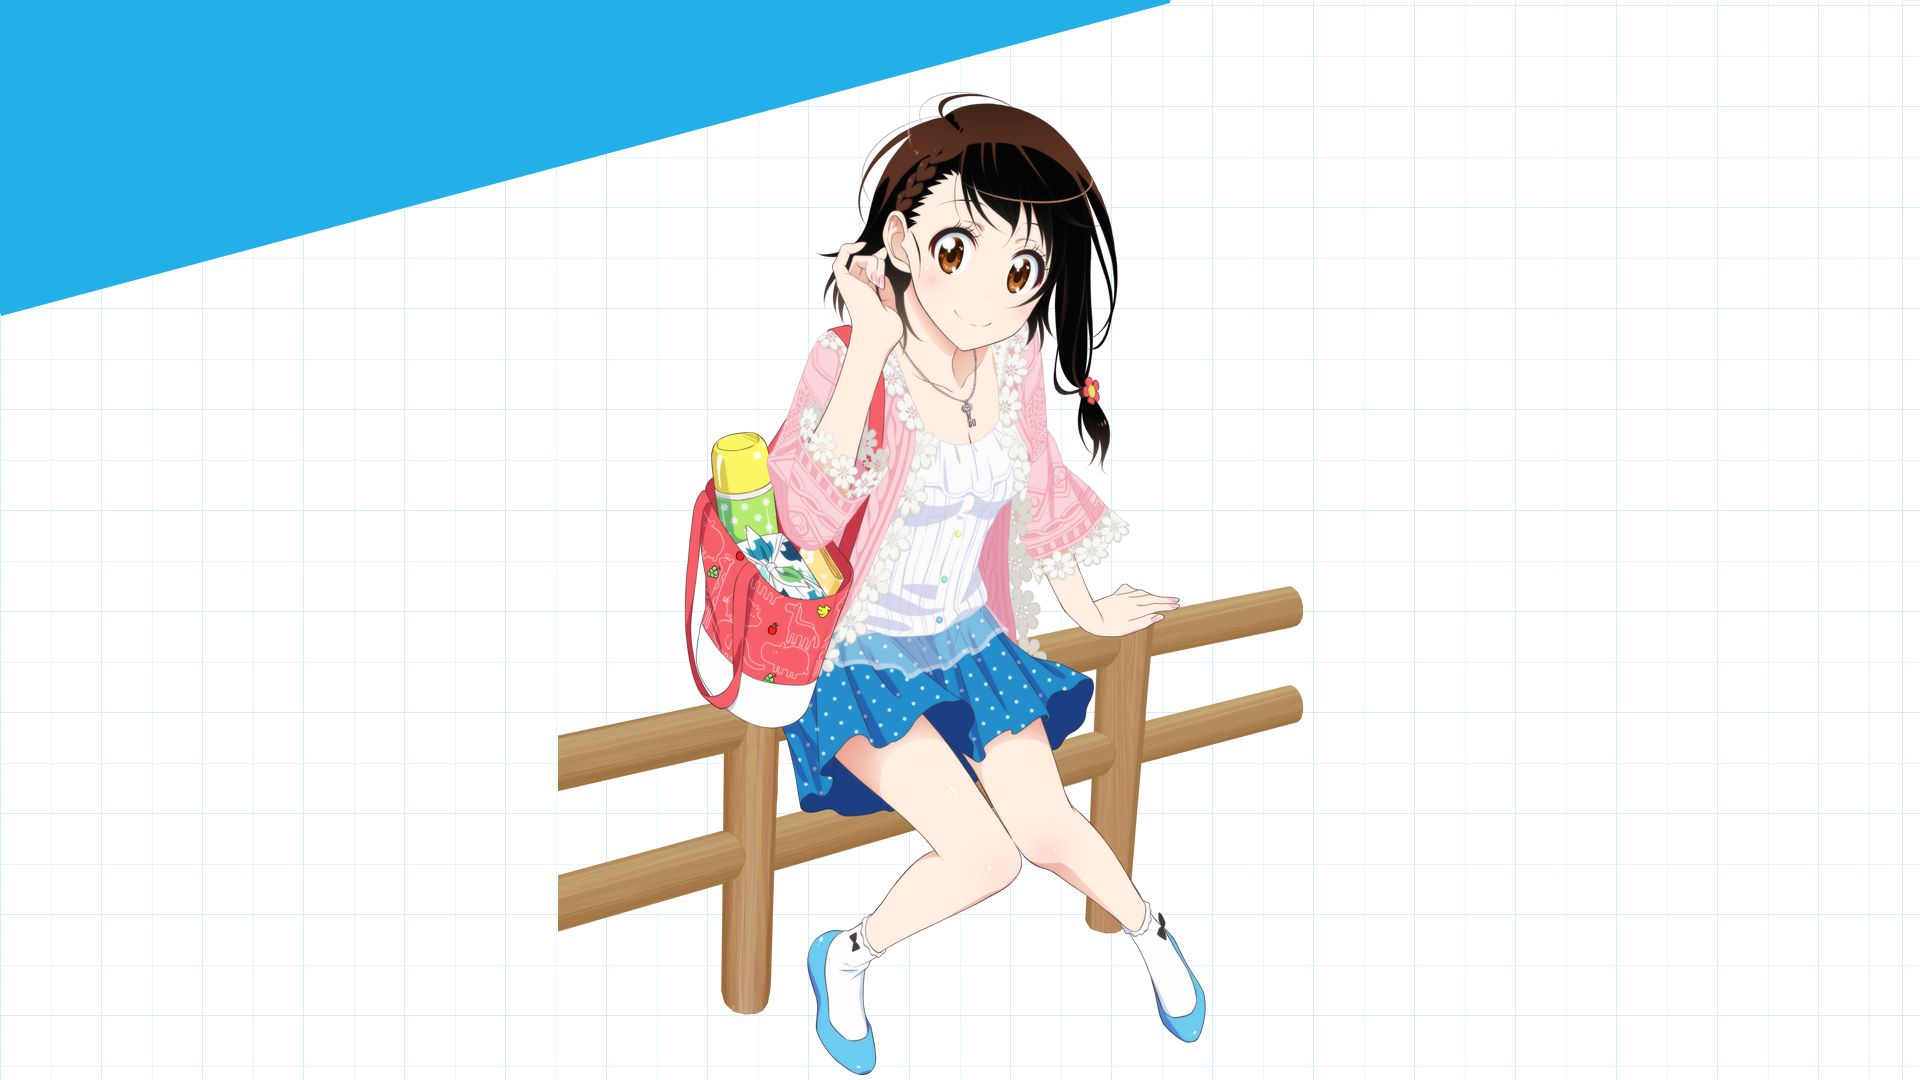 748704 descargar imagen animado, nisekoi, kosaki onodera: fondos de pantalla y protectores de pantalla gratis